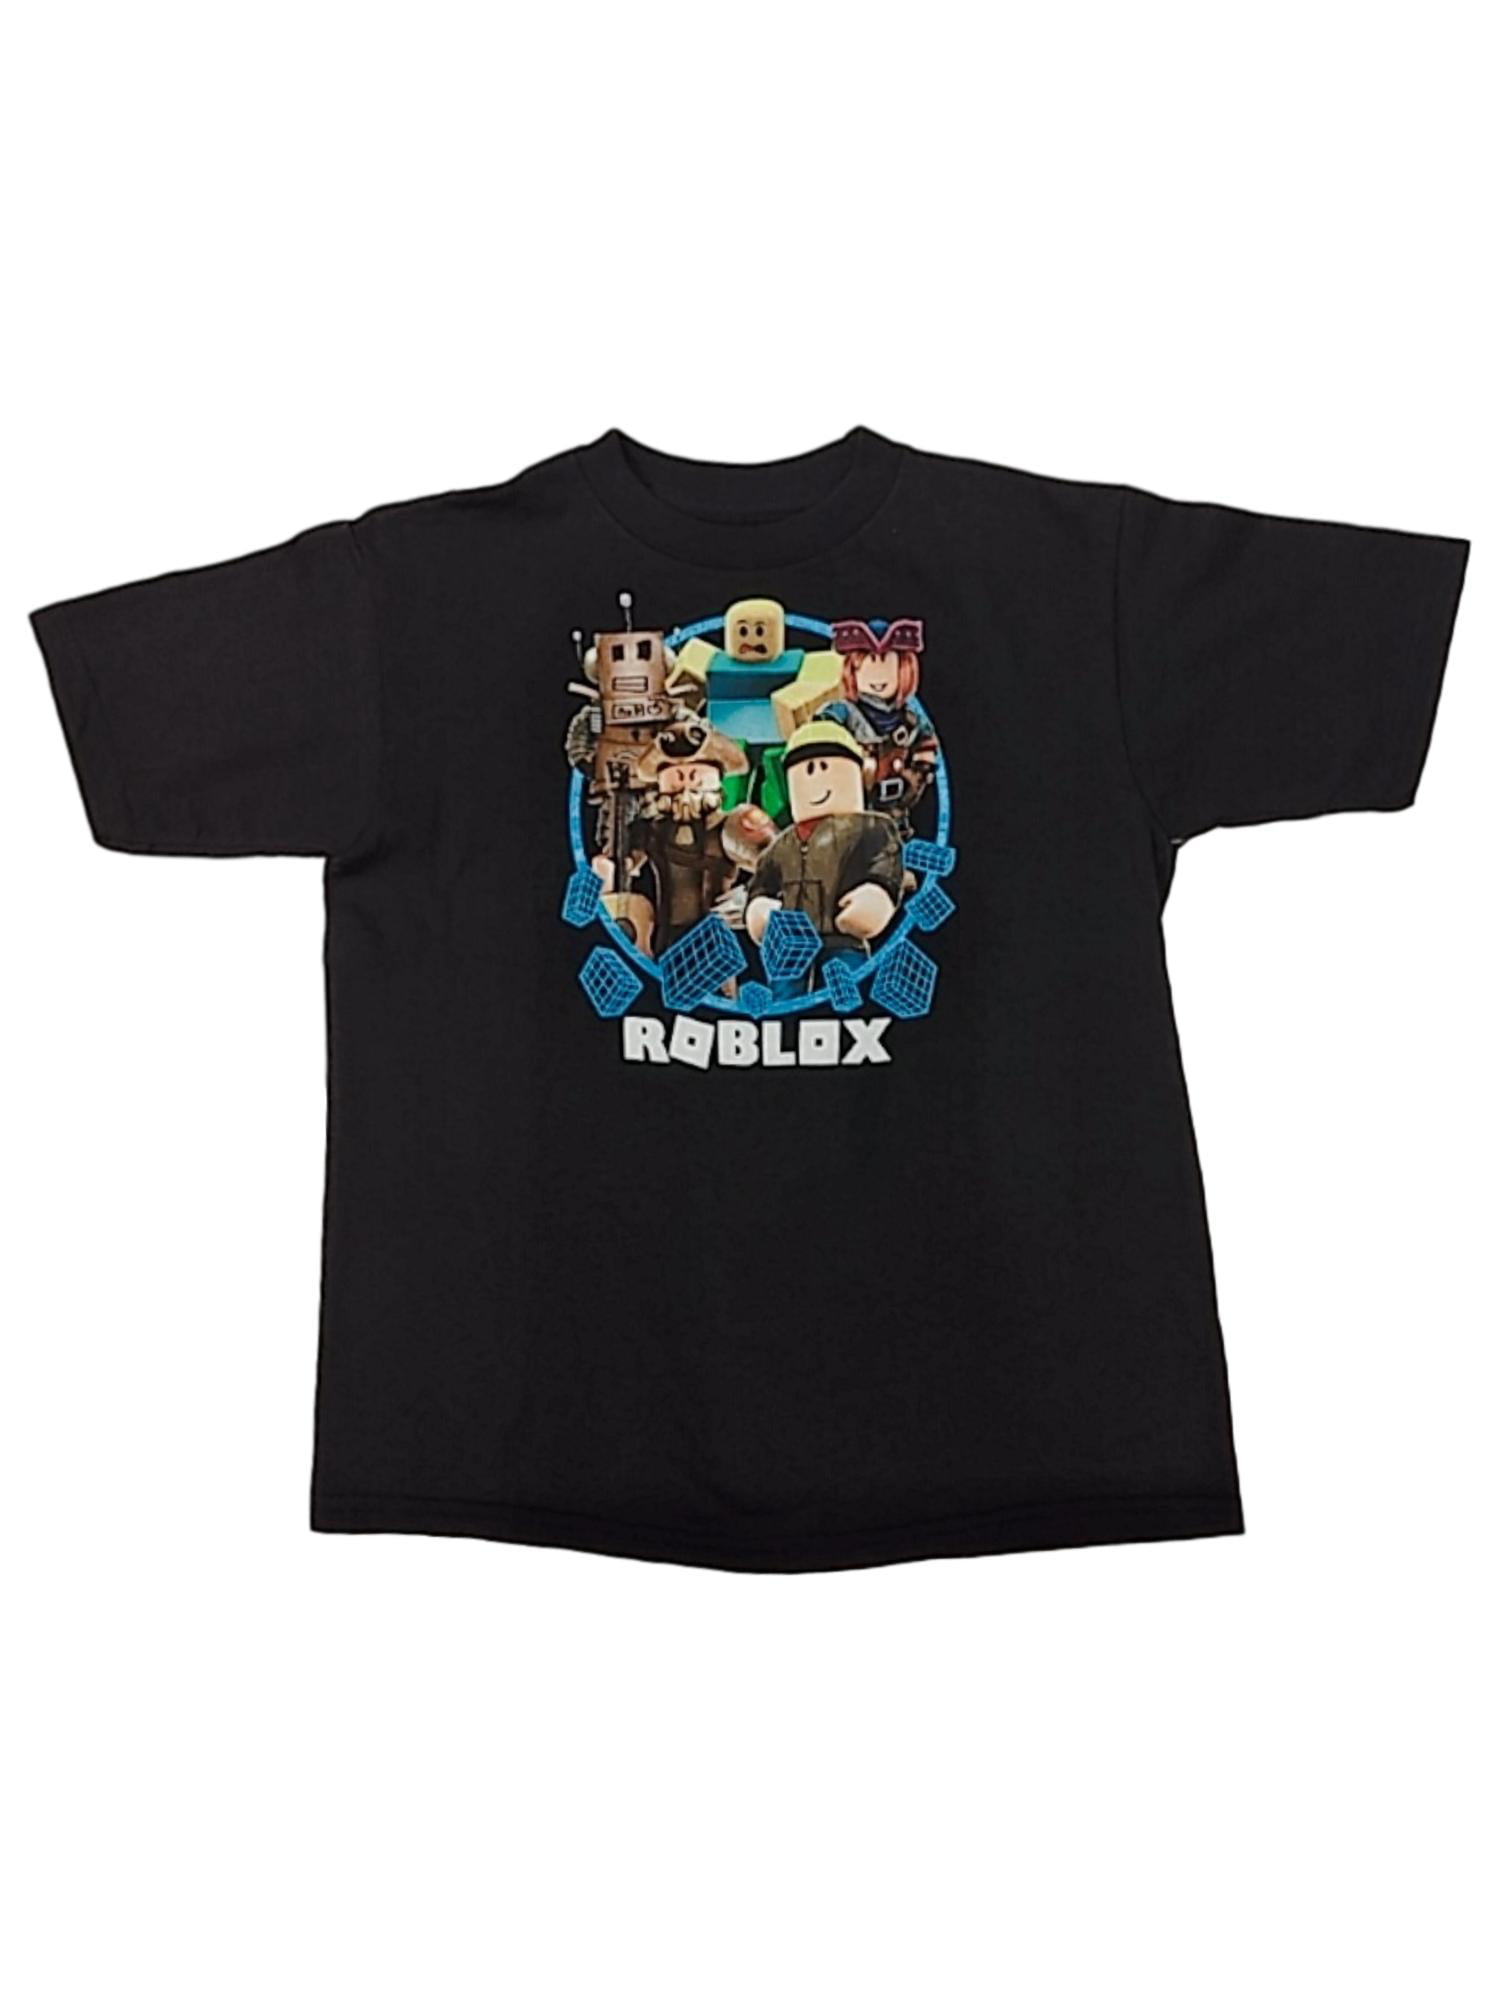 Boys Black Roblox Multi Character T Shirt Graphic Tee Shirt Large 6 7 Walmart Com Walmart Com - best shirt guide roblox